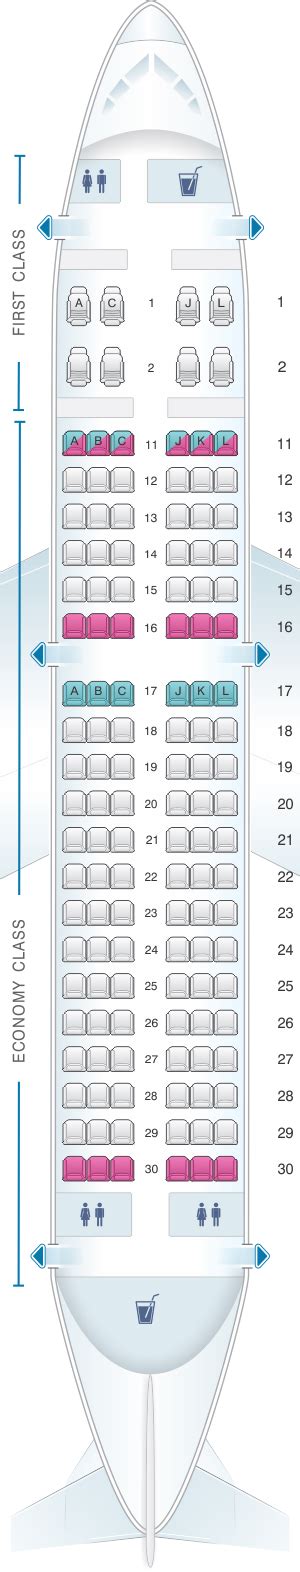 Air China Seat Map Color